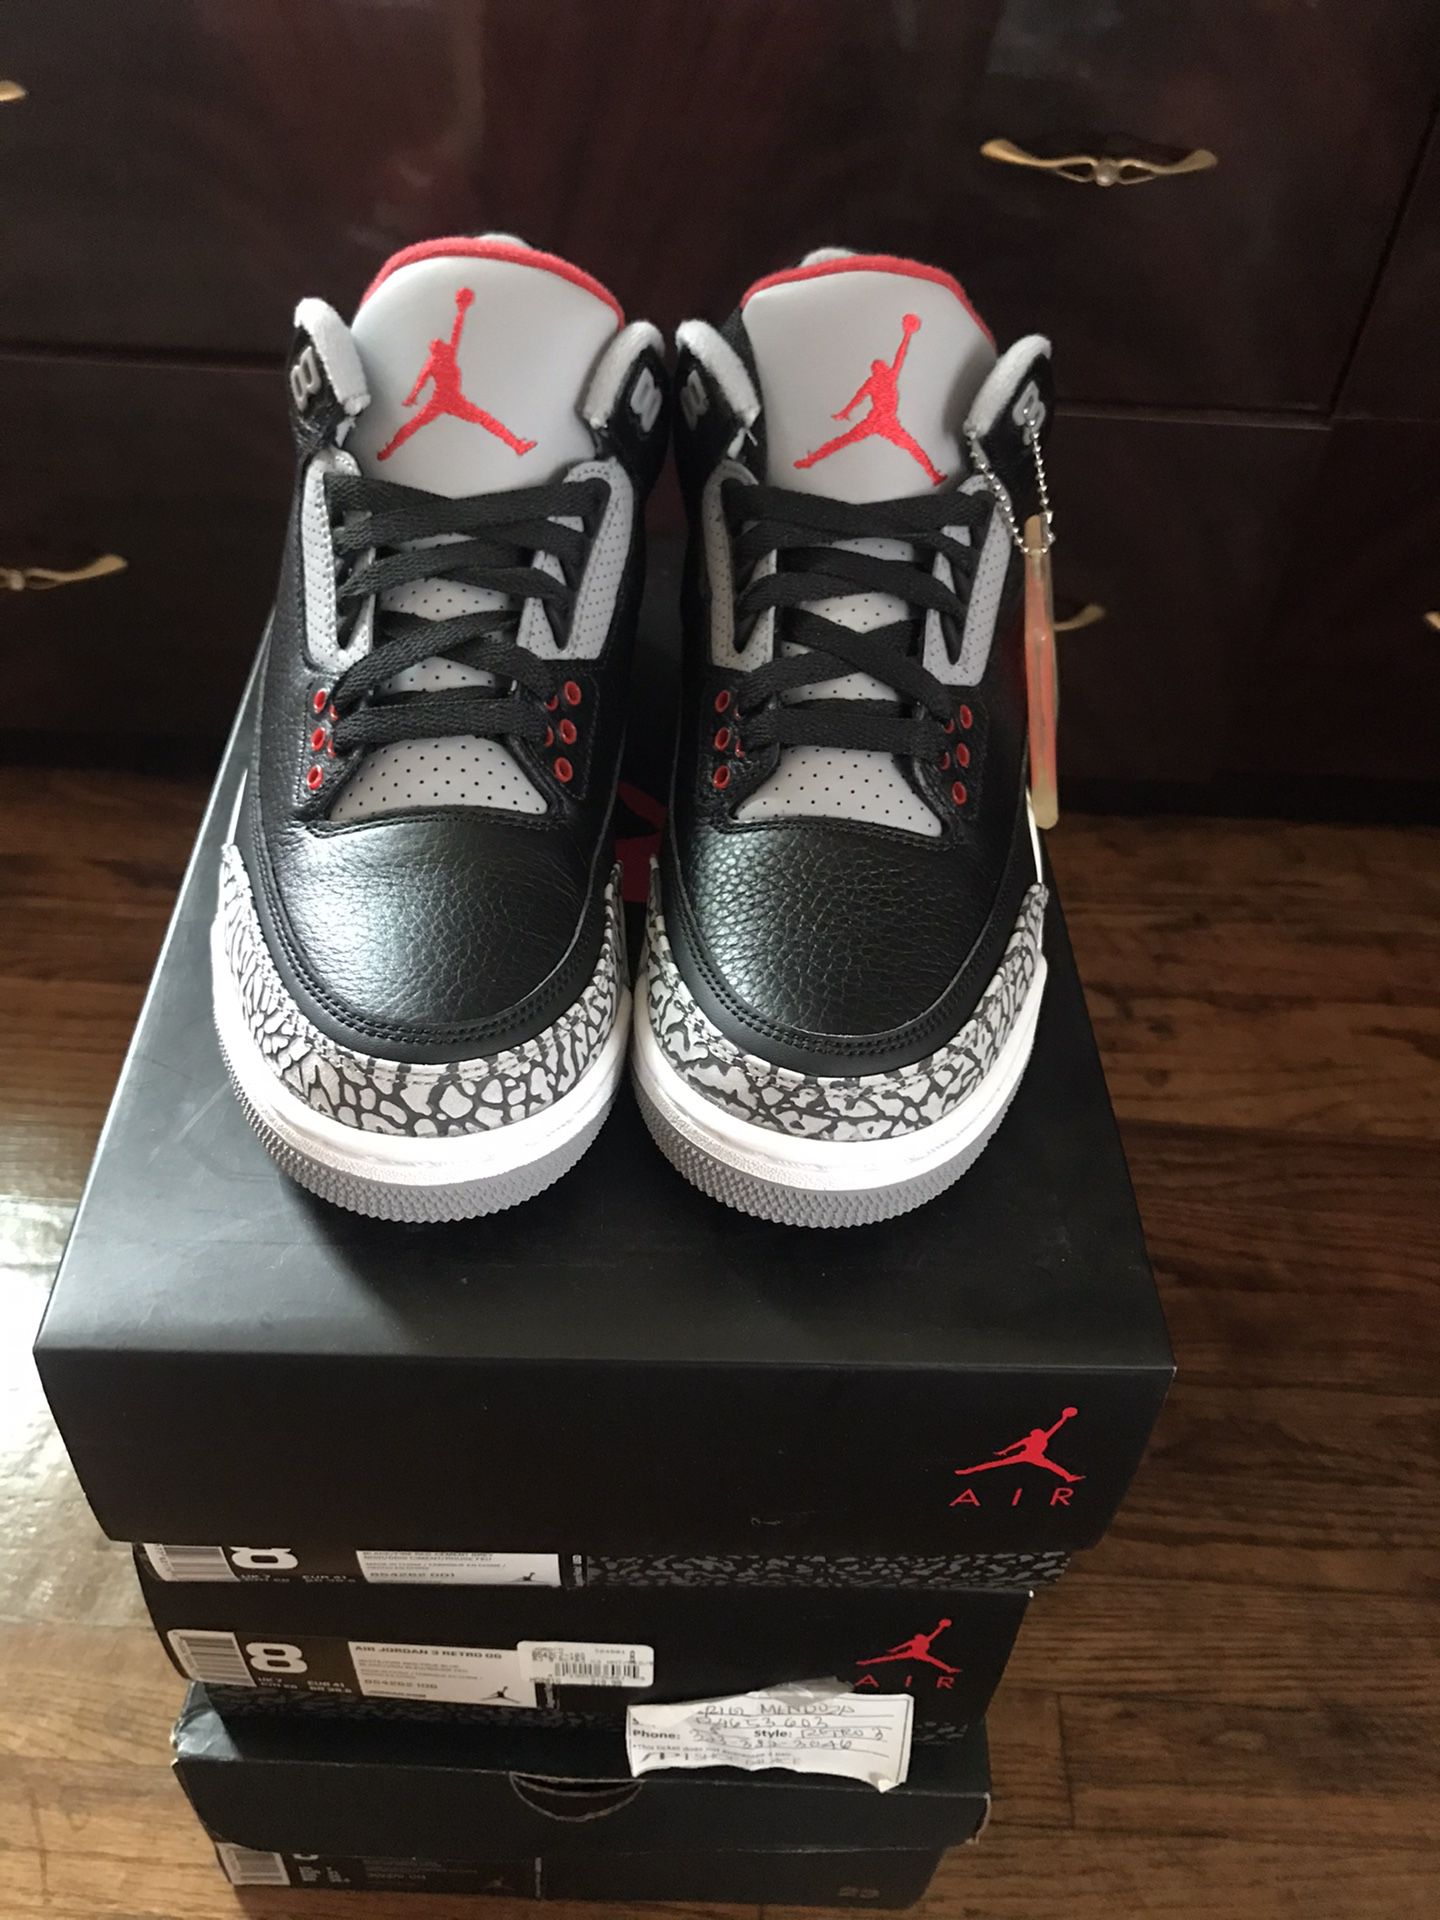 Air Jordan Retro 3 OG 88 2018 Size 8